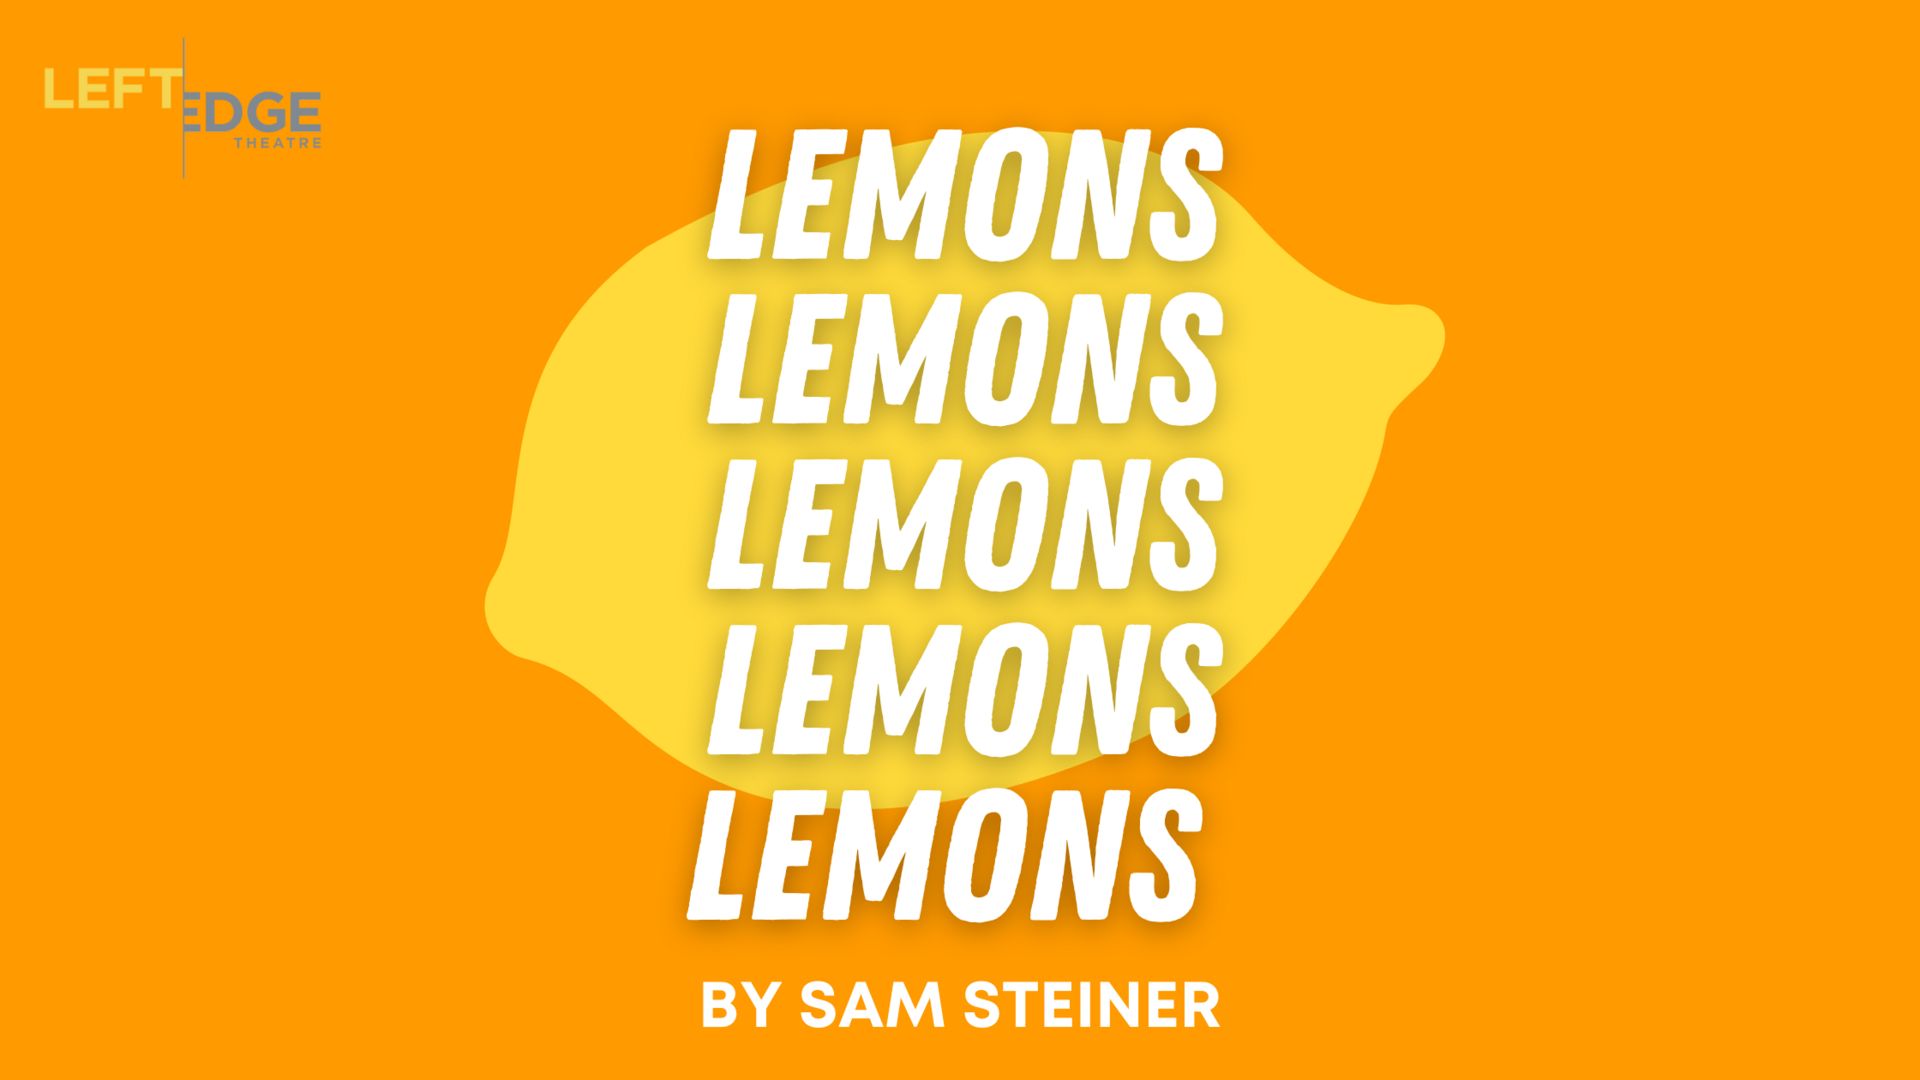 Lemons, Lemons, Lemons, Lemons, Lemons, Santa Rosa, California, United States